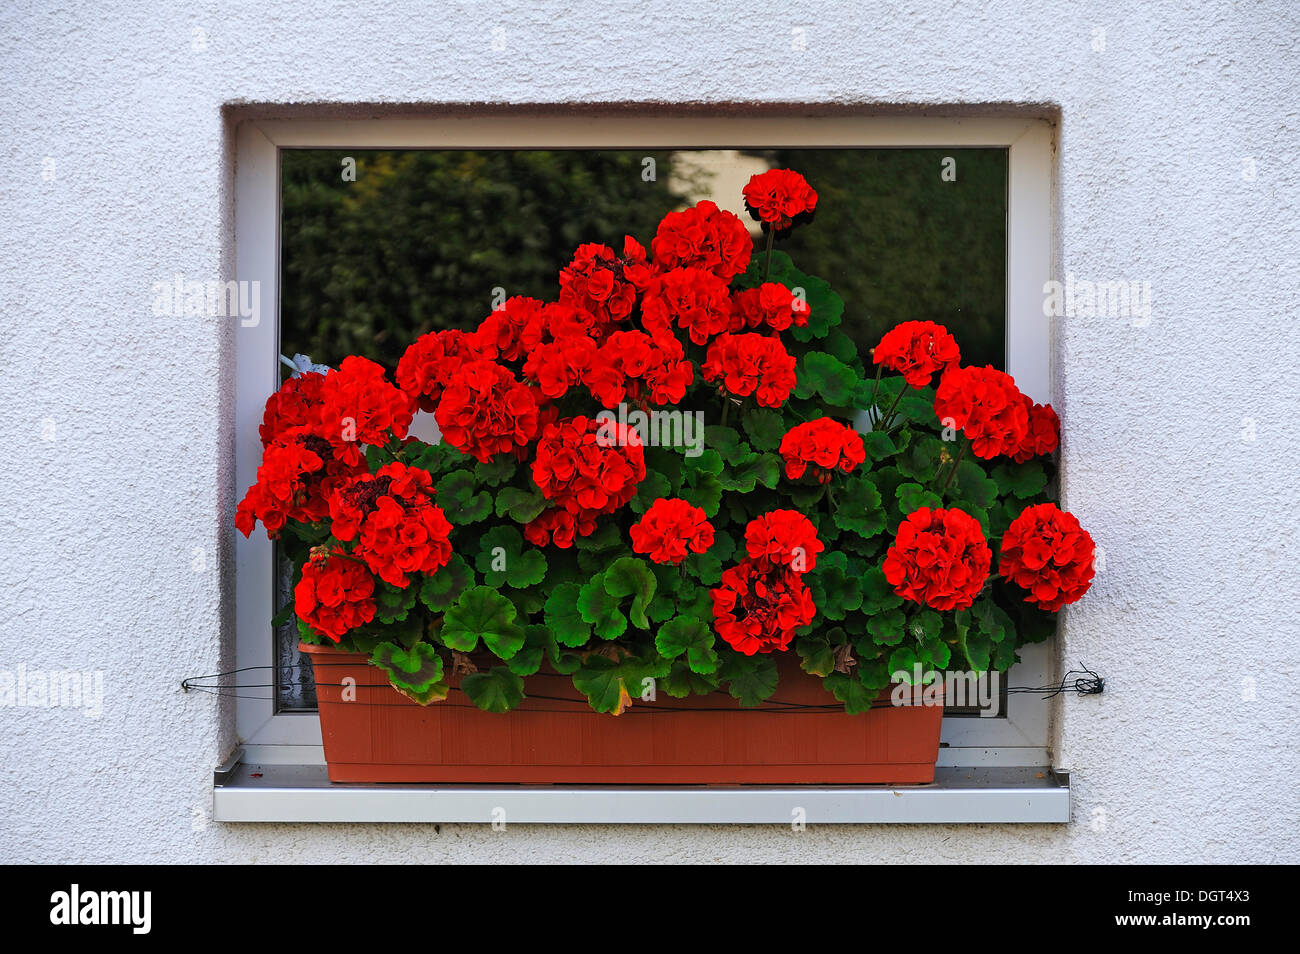 Fioritura dei gerani (Pelargonium graveolens) in una cassetta per fiori nella parte anteriore di una piccola finestra, Oeedhof, Alta Franconia, Bavaria Foto Stock